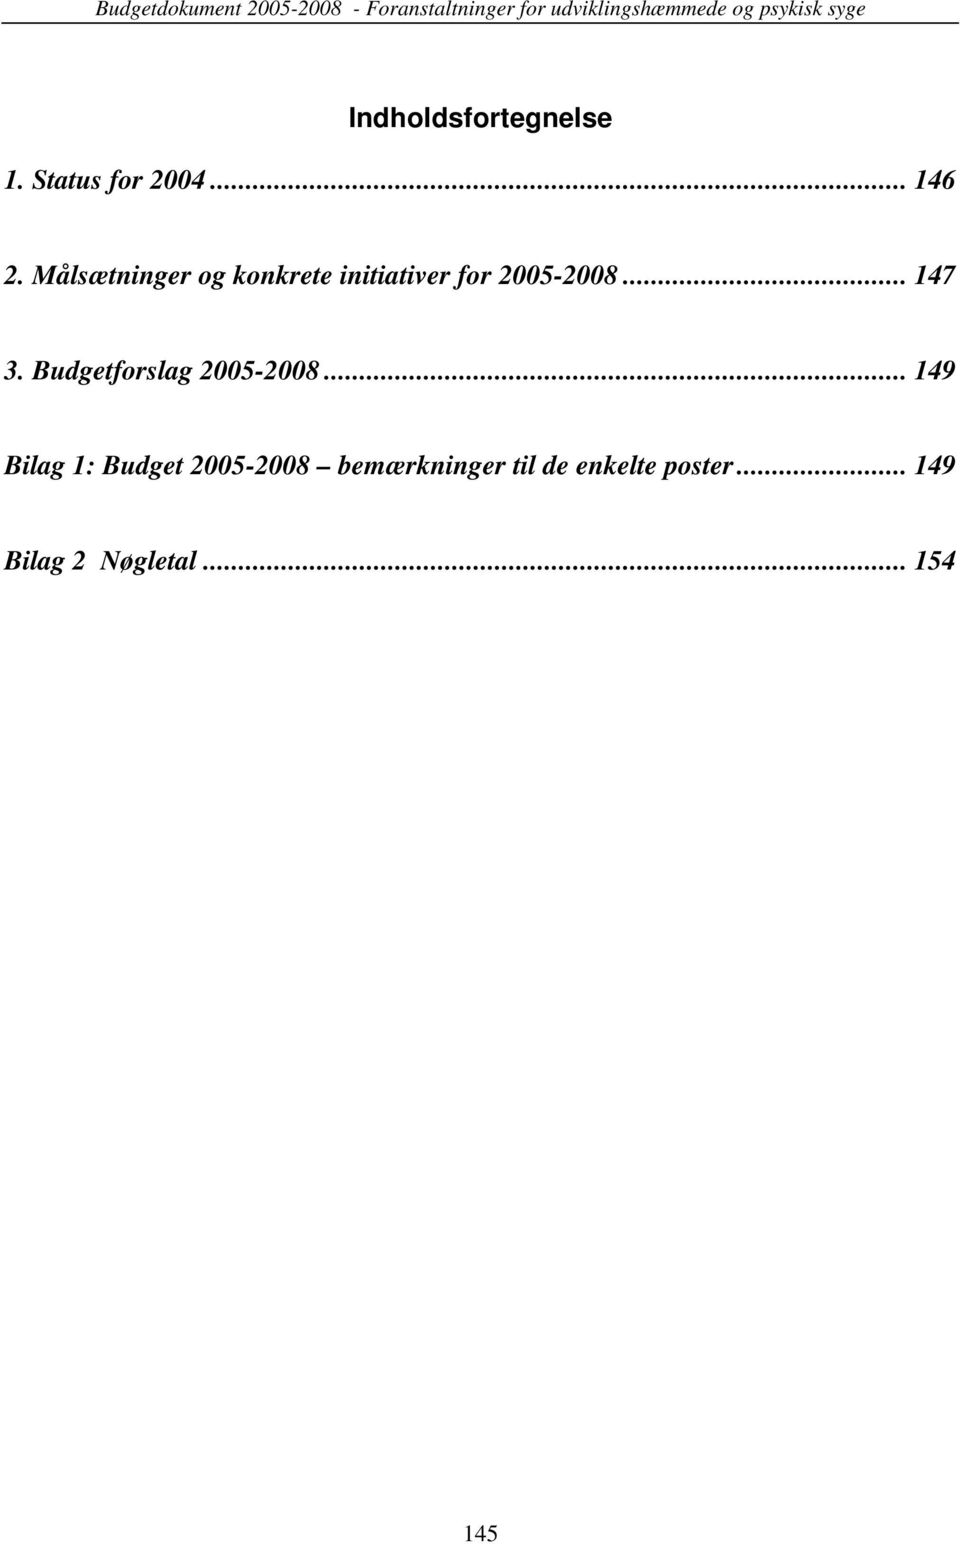 Budgetforslag 2005-2008.